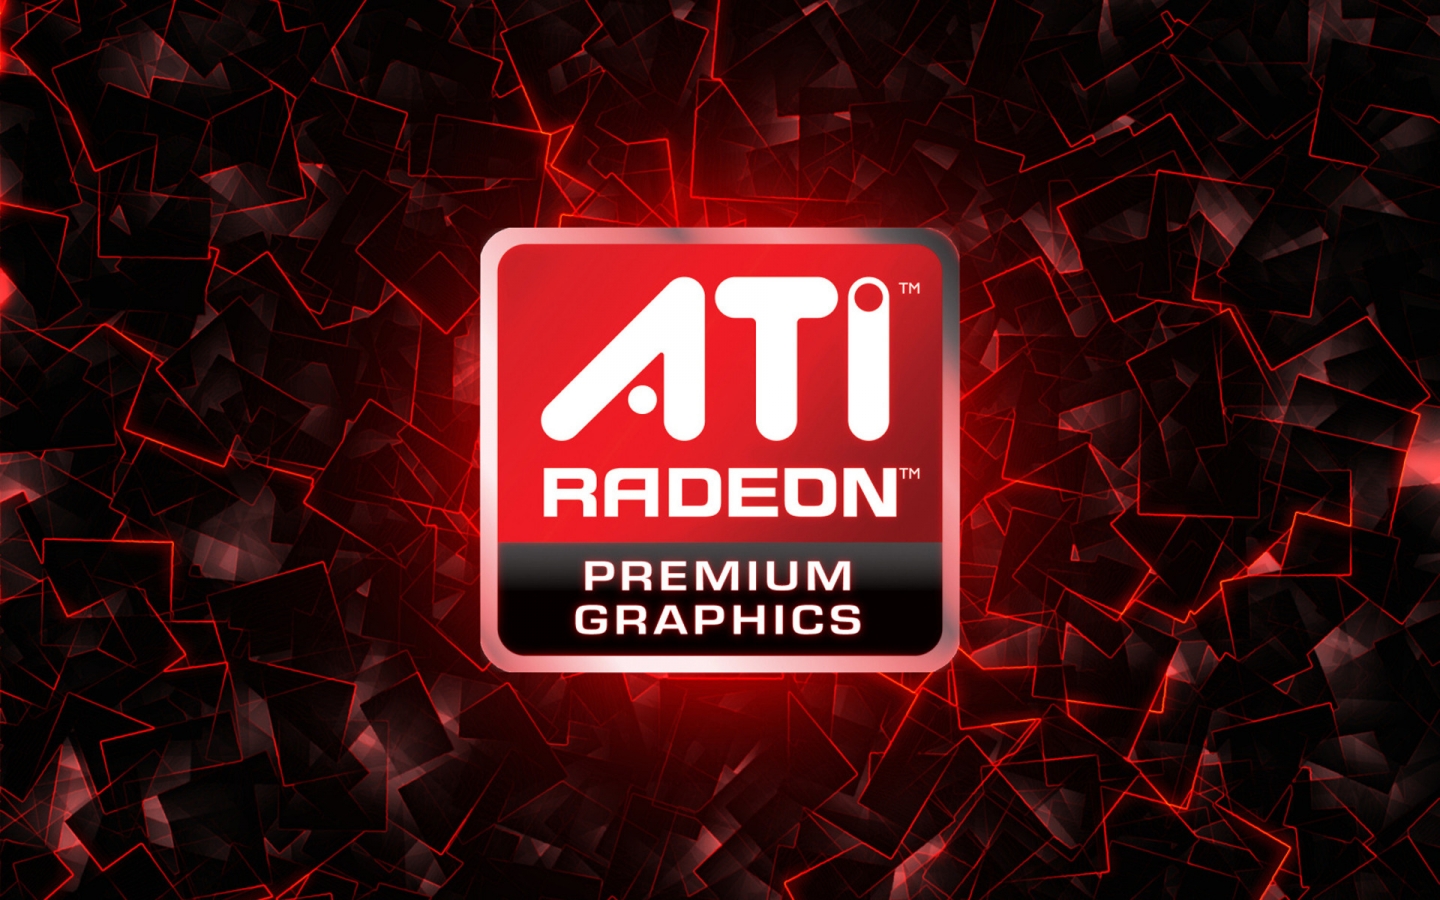 ATI Radeon Premium Graphics for 1440 x 900 widescreen resolution